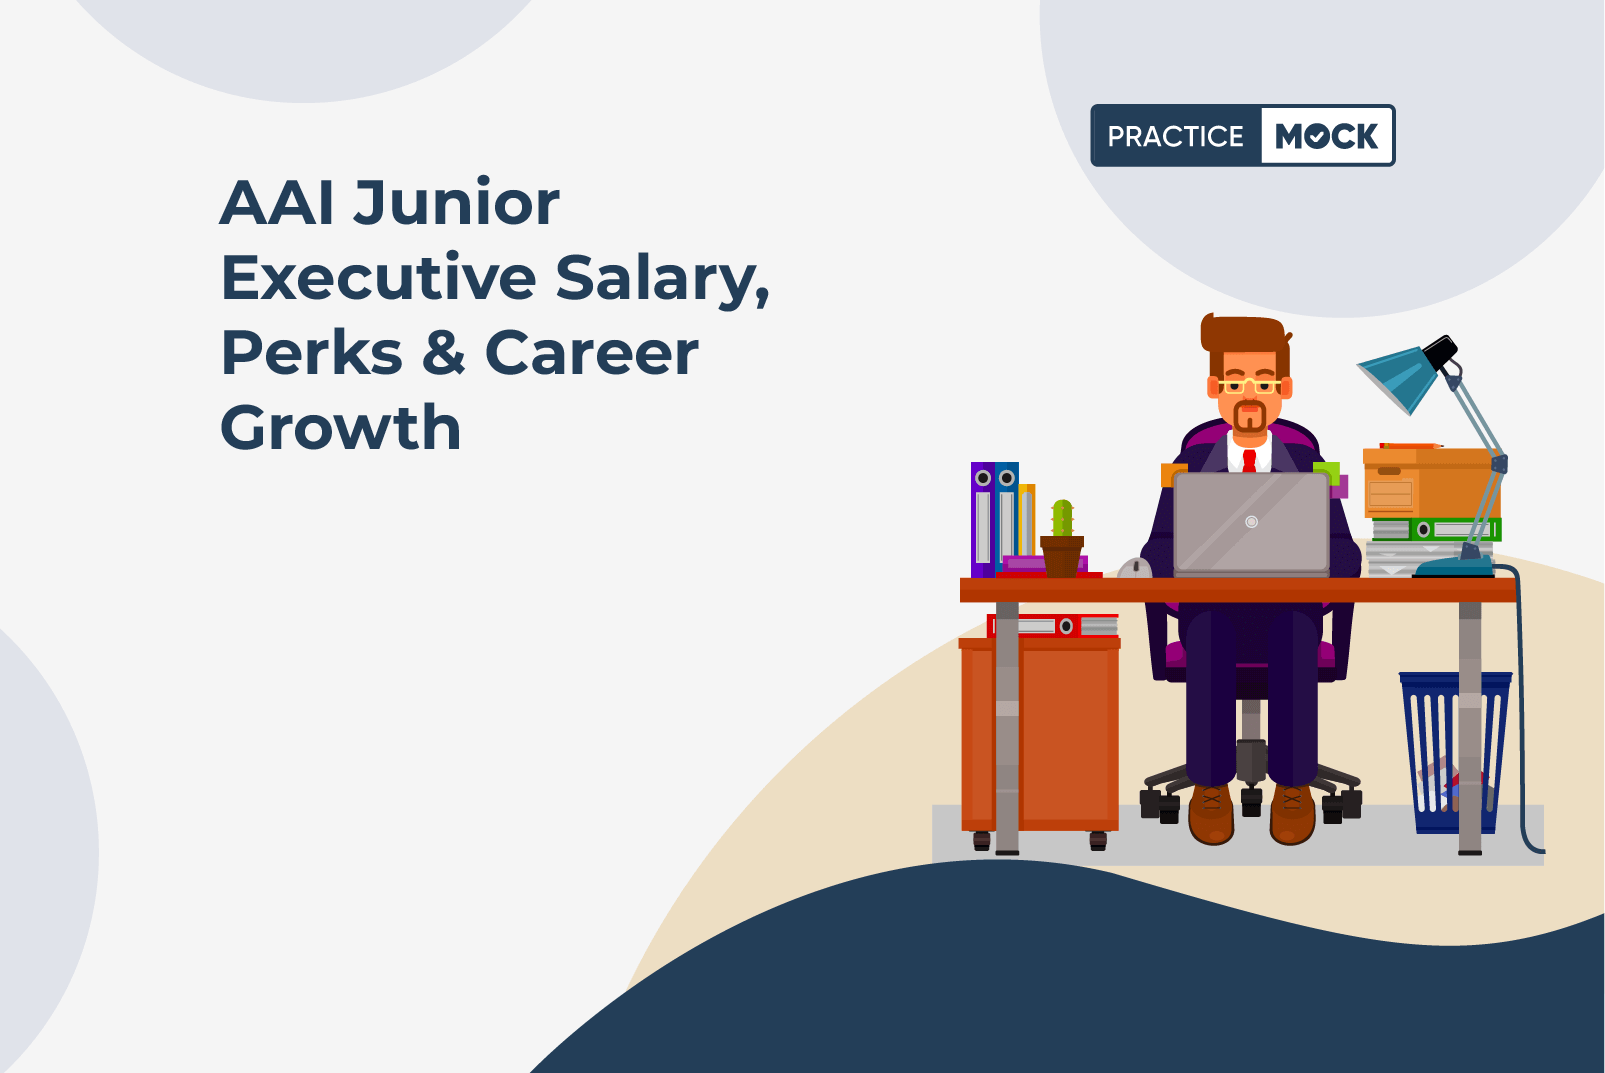 AAI Junior Executive Salary, Perks & Career Growth